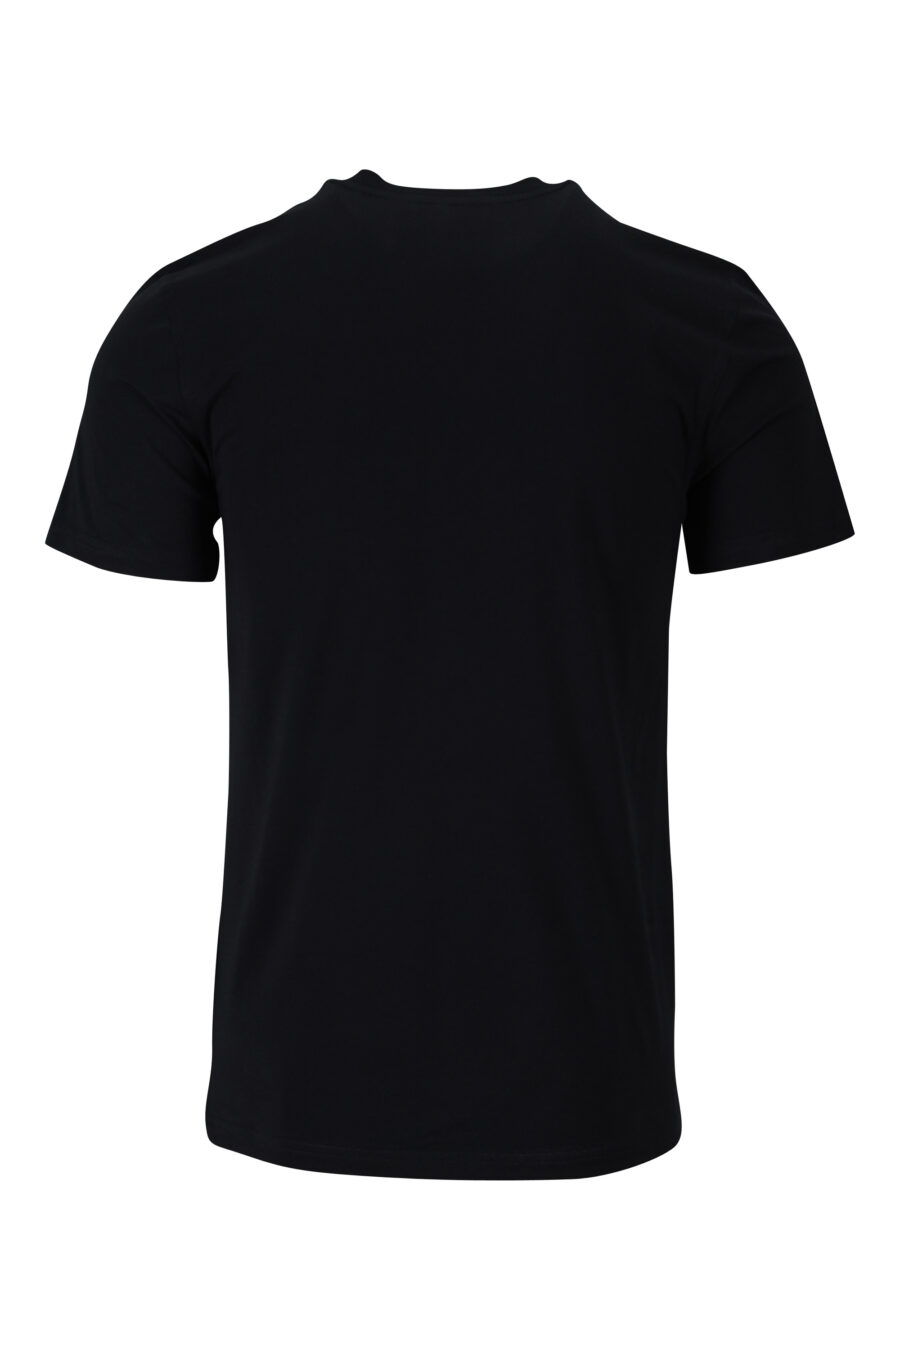 Camiseta negra con algodón eco con minilogo "teddy" - 889316853124 1